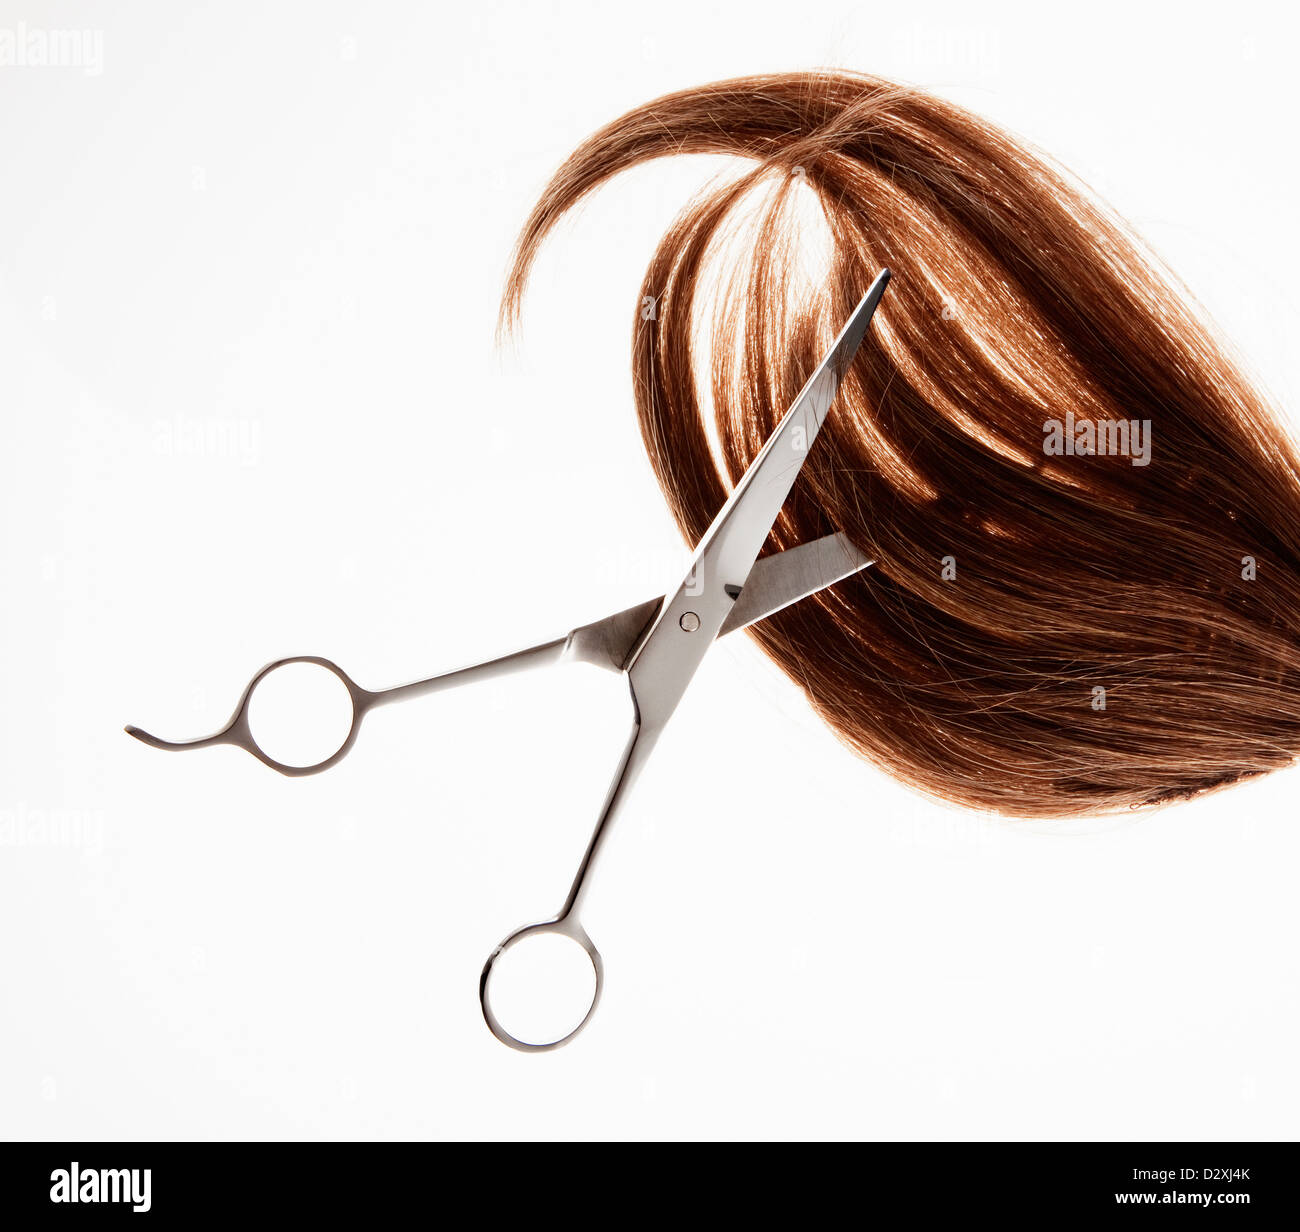 Scissors cutting through brunette hair Stock Photo